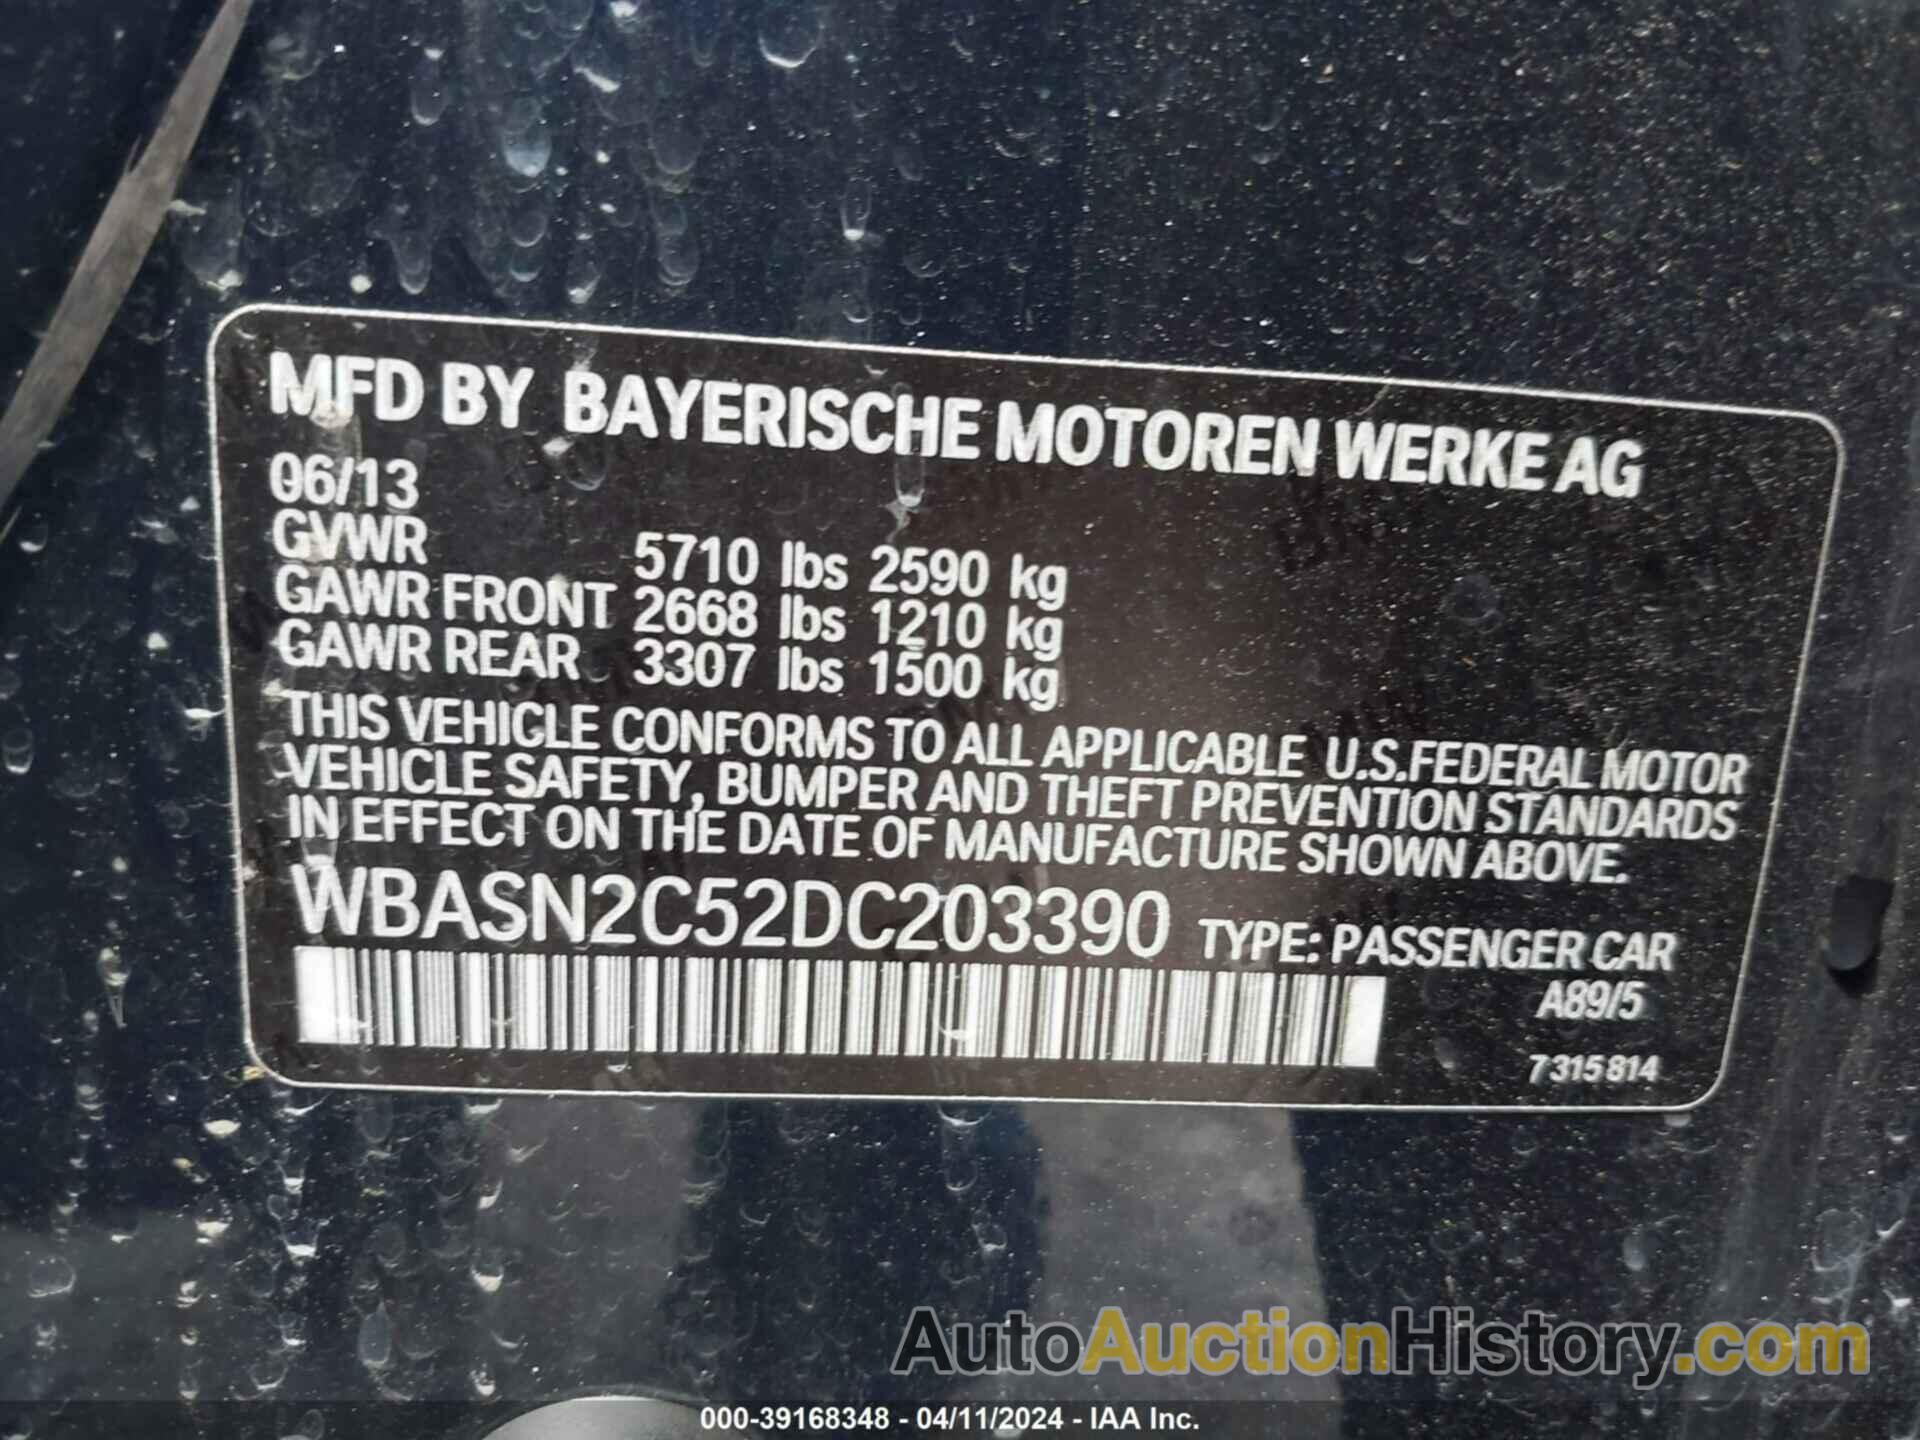 BMW 535I GRAN TURISMO, WBASN2C52DC203390